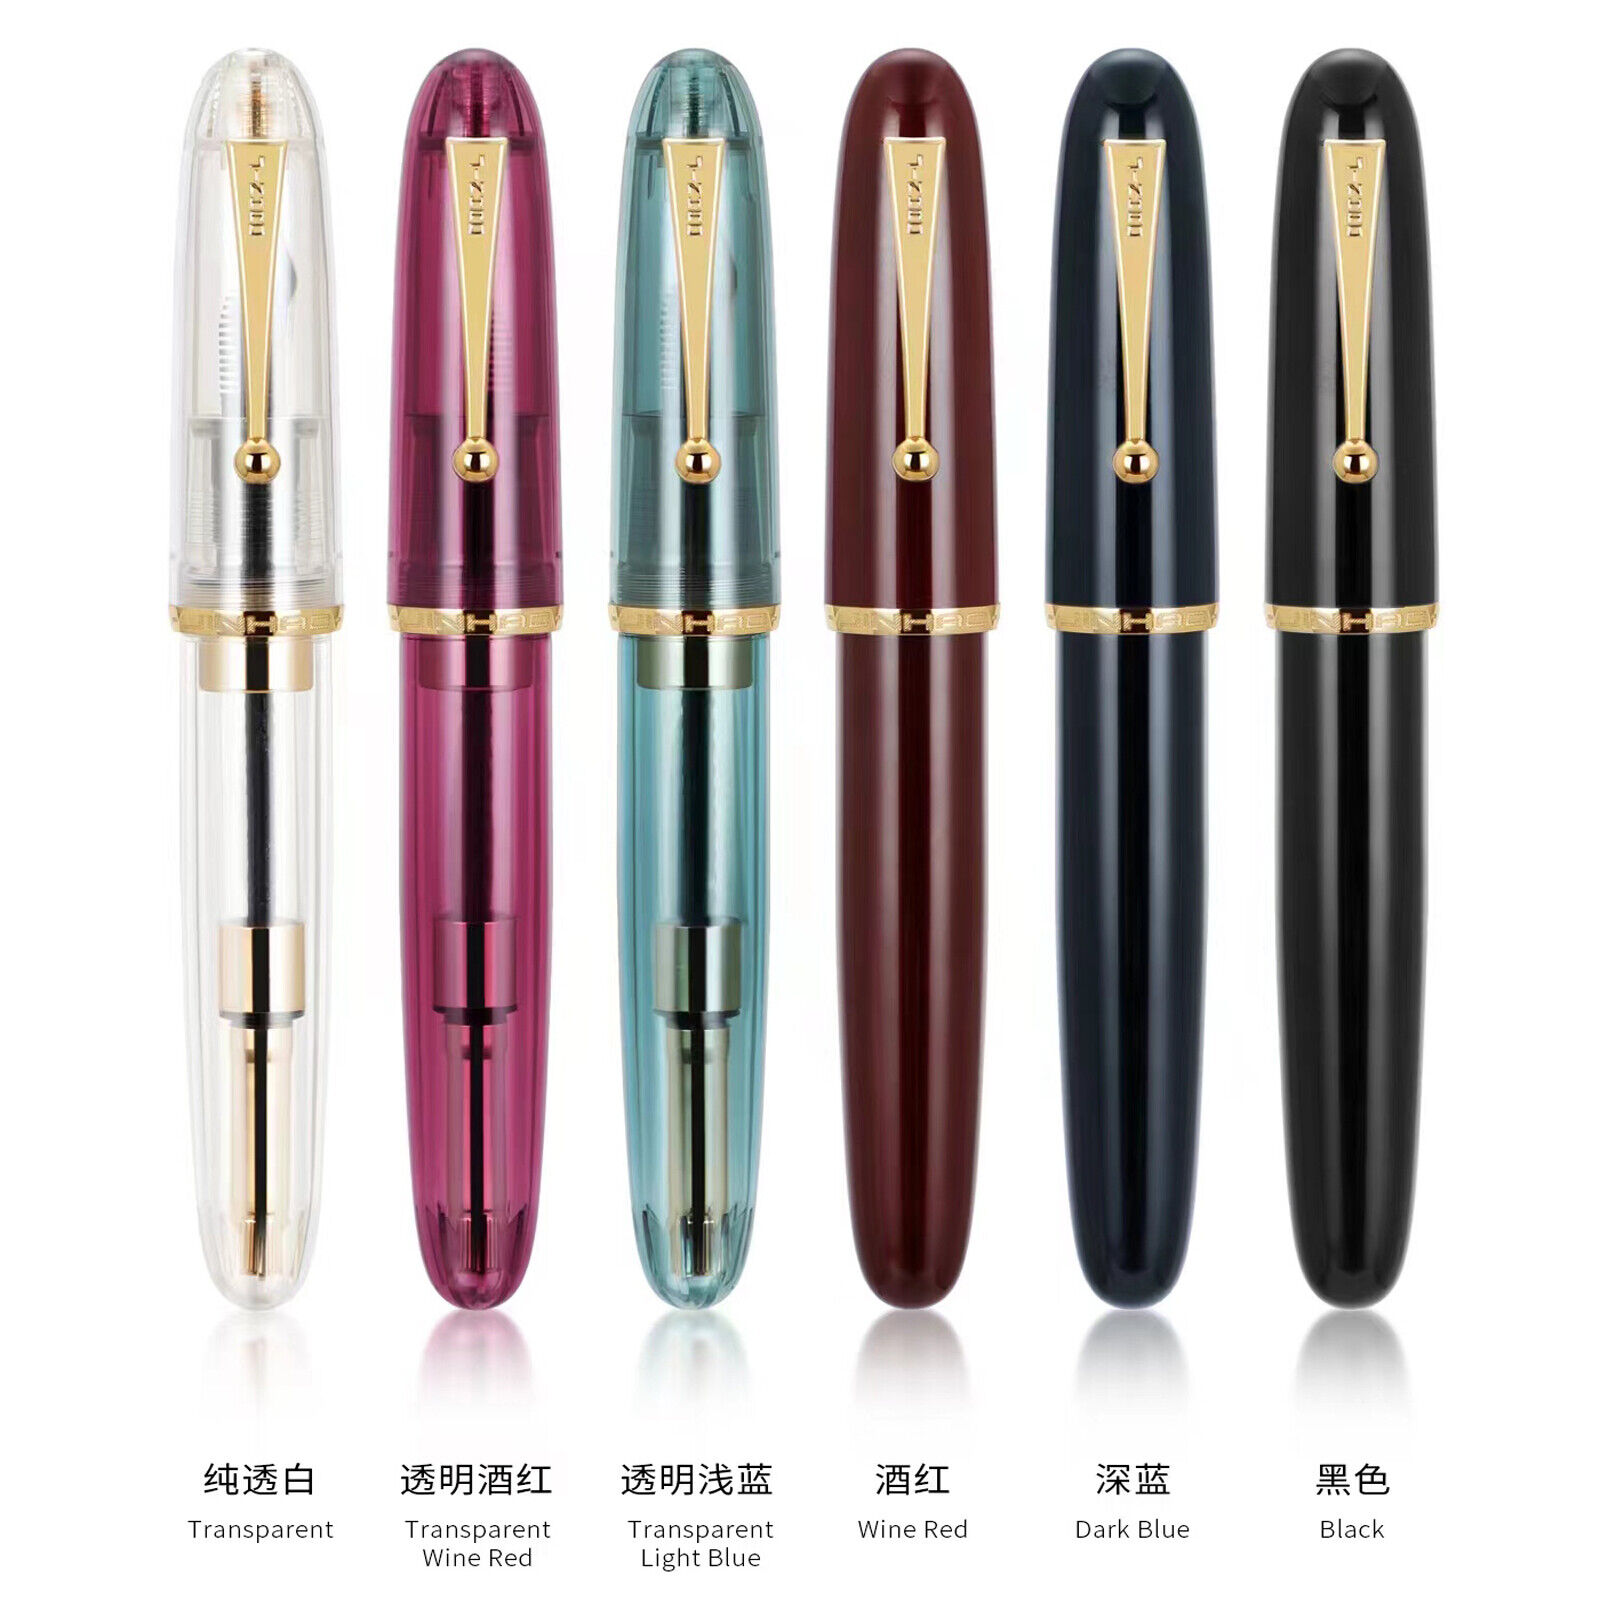 Jinhao 9019 Jumbo Fountain Pen Golden Accent Acrylic Screw Cap With Box